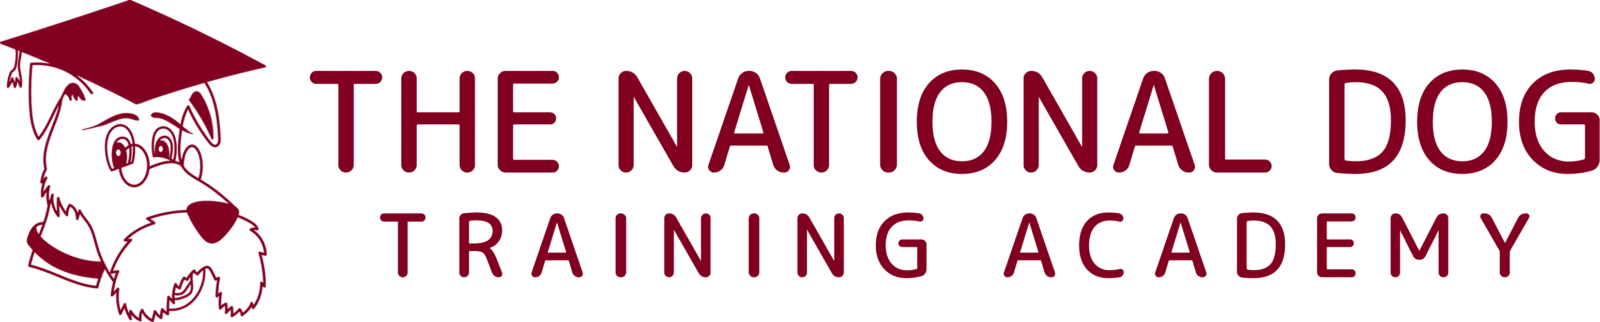 The National Dog Training Academy